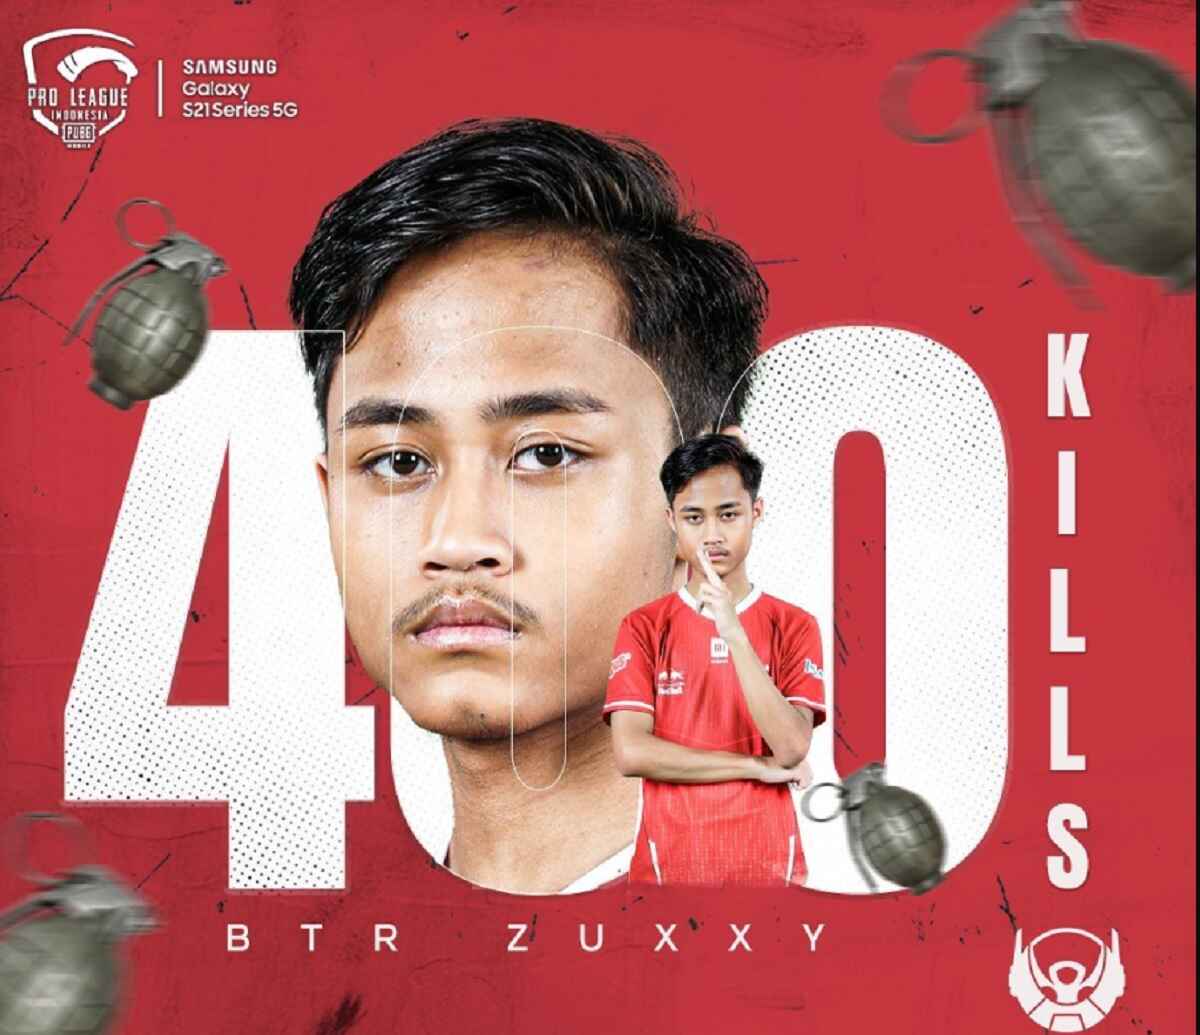 400 kill btr zuxxy